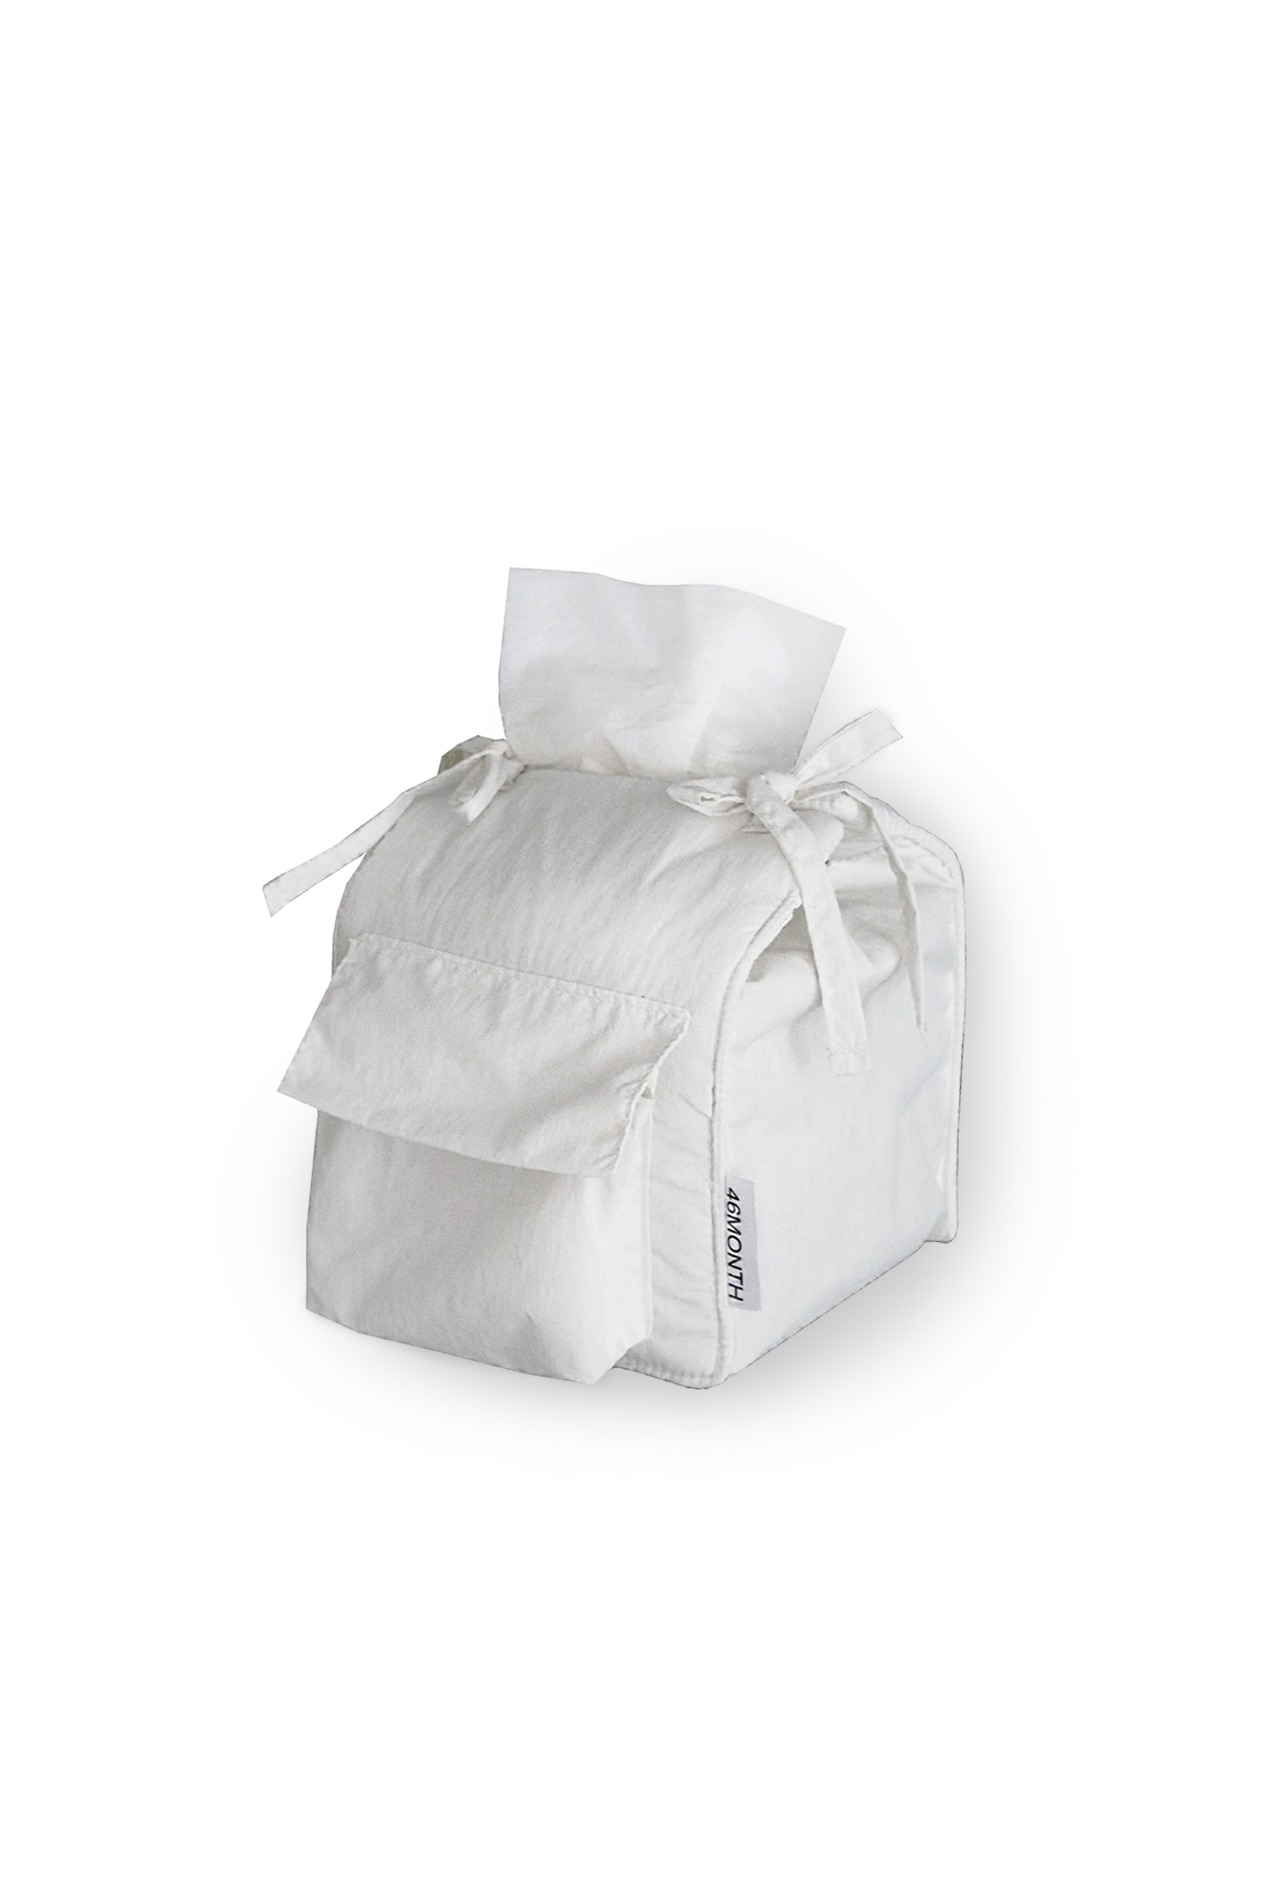 cushion pocket Tissue cover